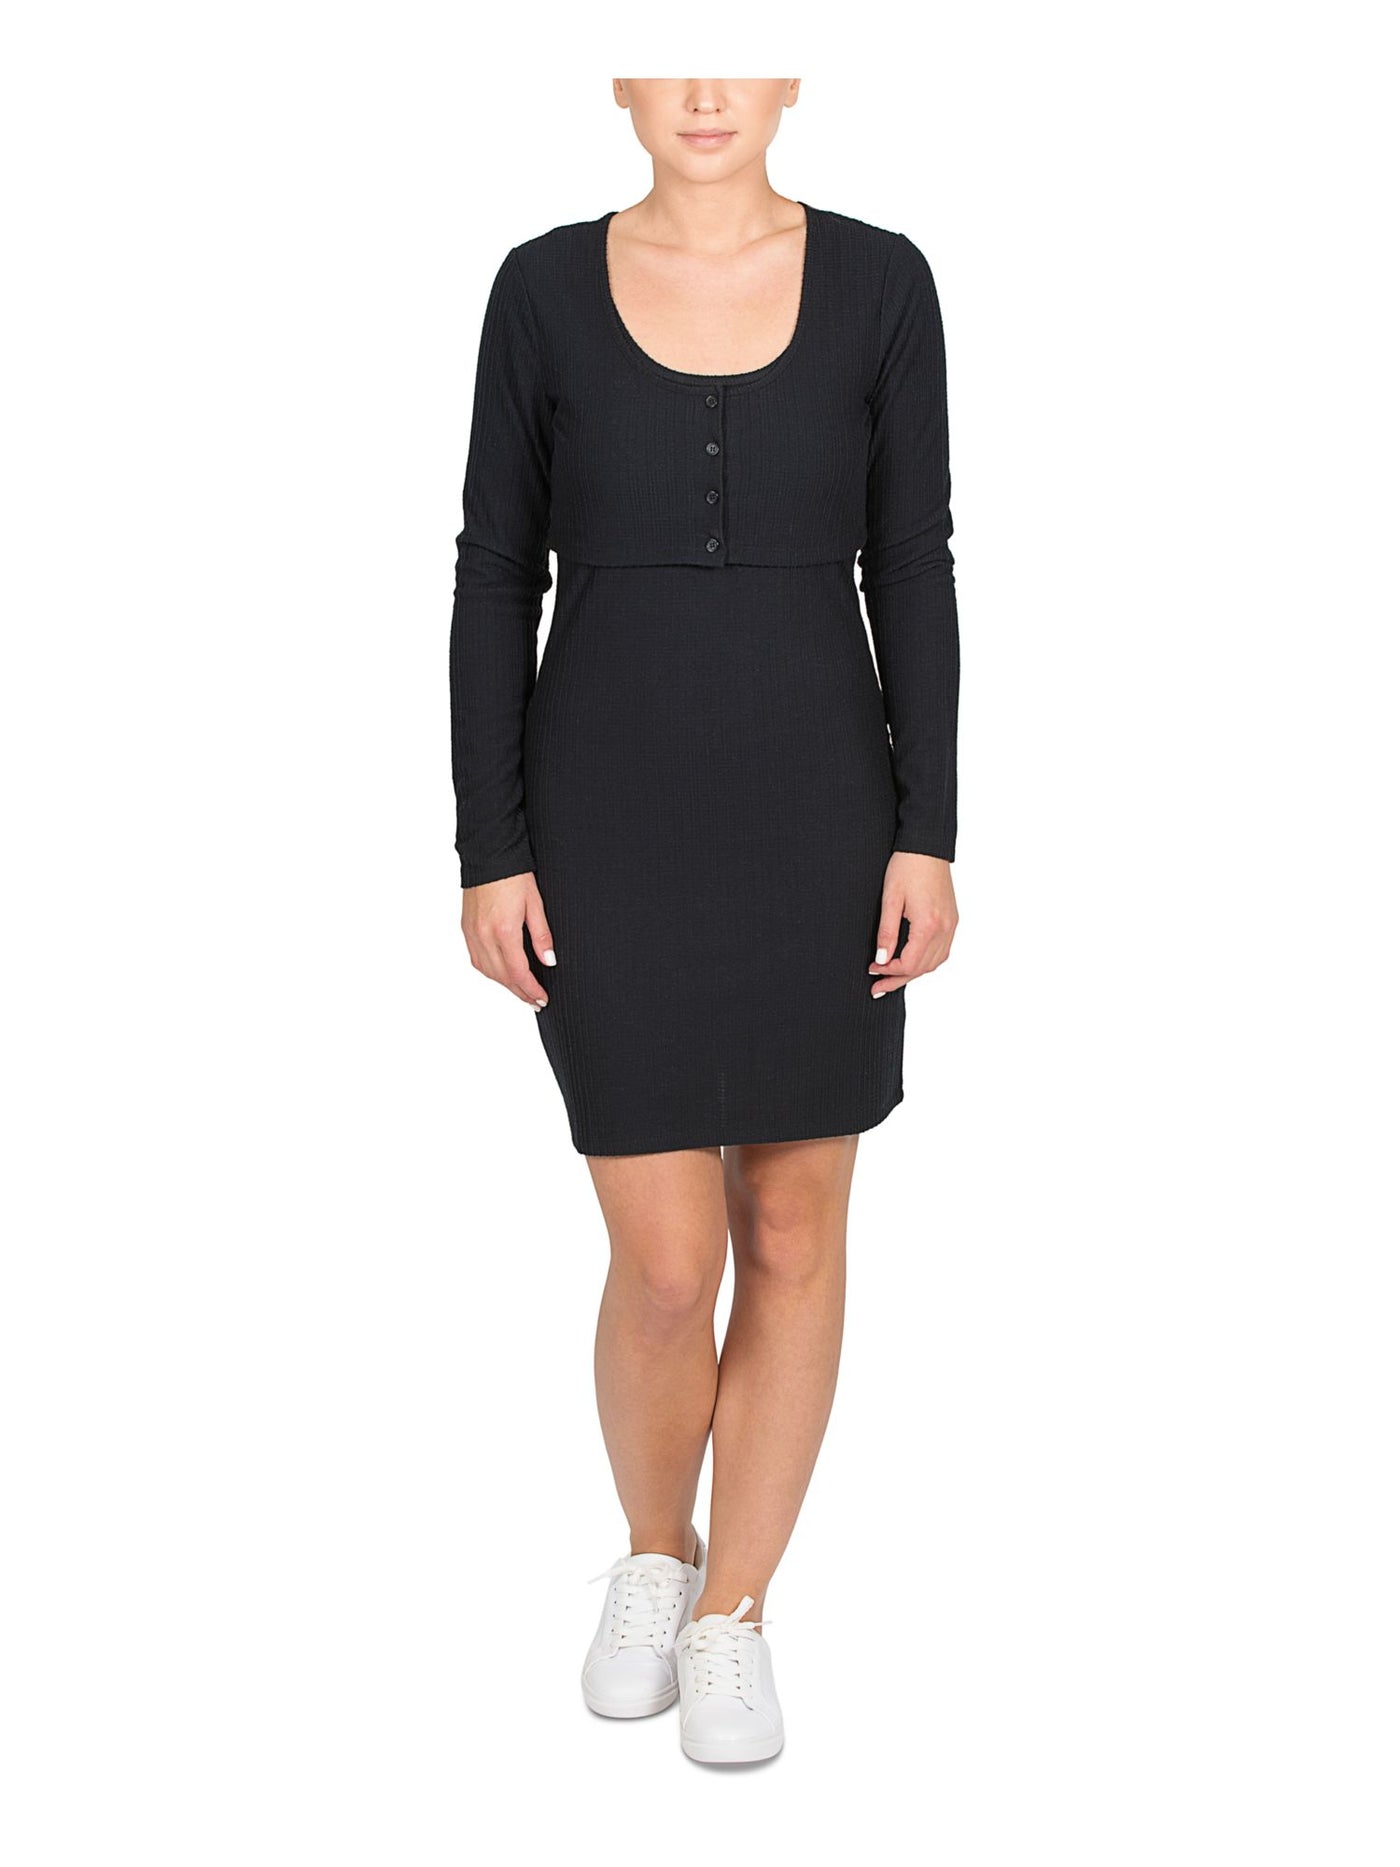 HIPPIE ROSE Womens Black Stretch Long Sleeve Scoop Neck Wear To Work Crop Top Sweater Juniors M